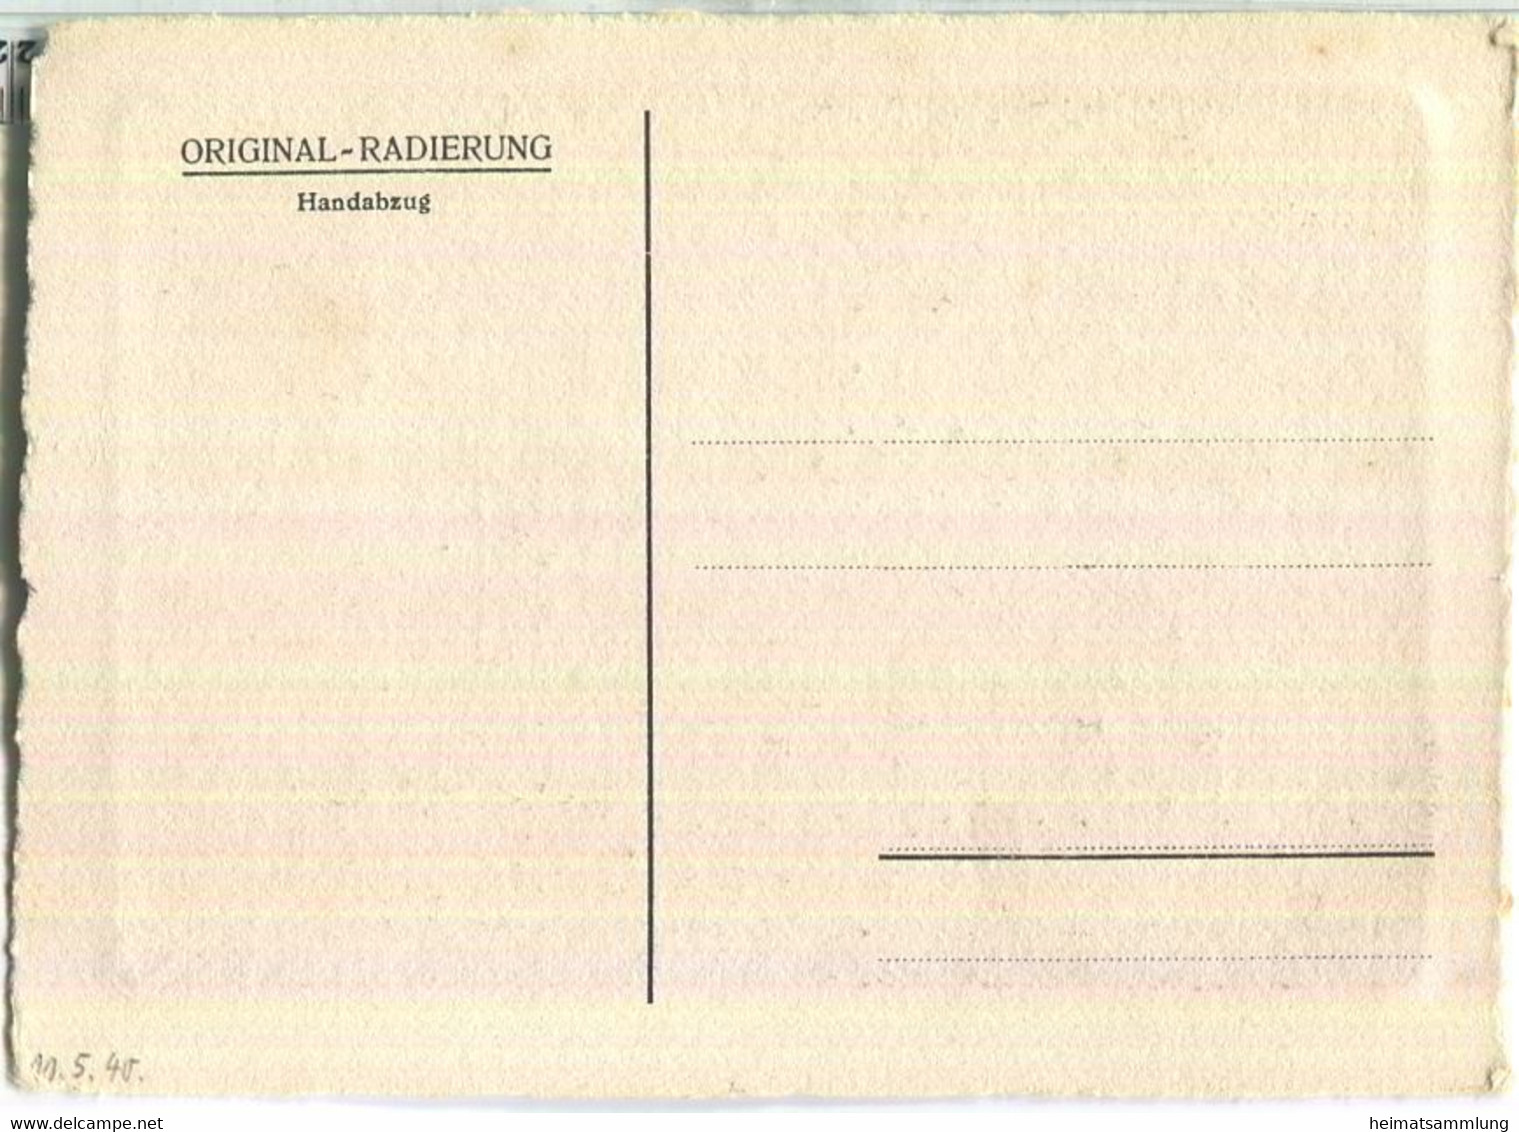 Berlin-Rixdorf - Radierung - Beetsaal Ca. 1940 - Original-Radierung - Handabzug - Neukölln